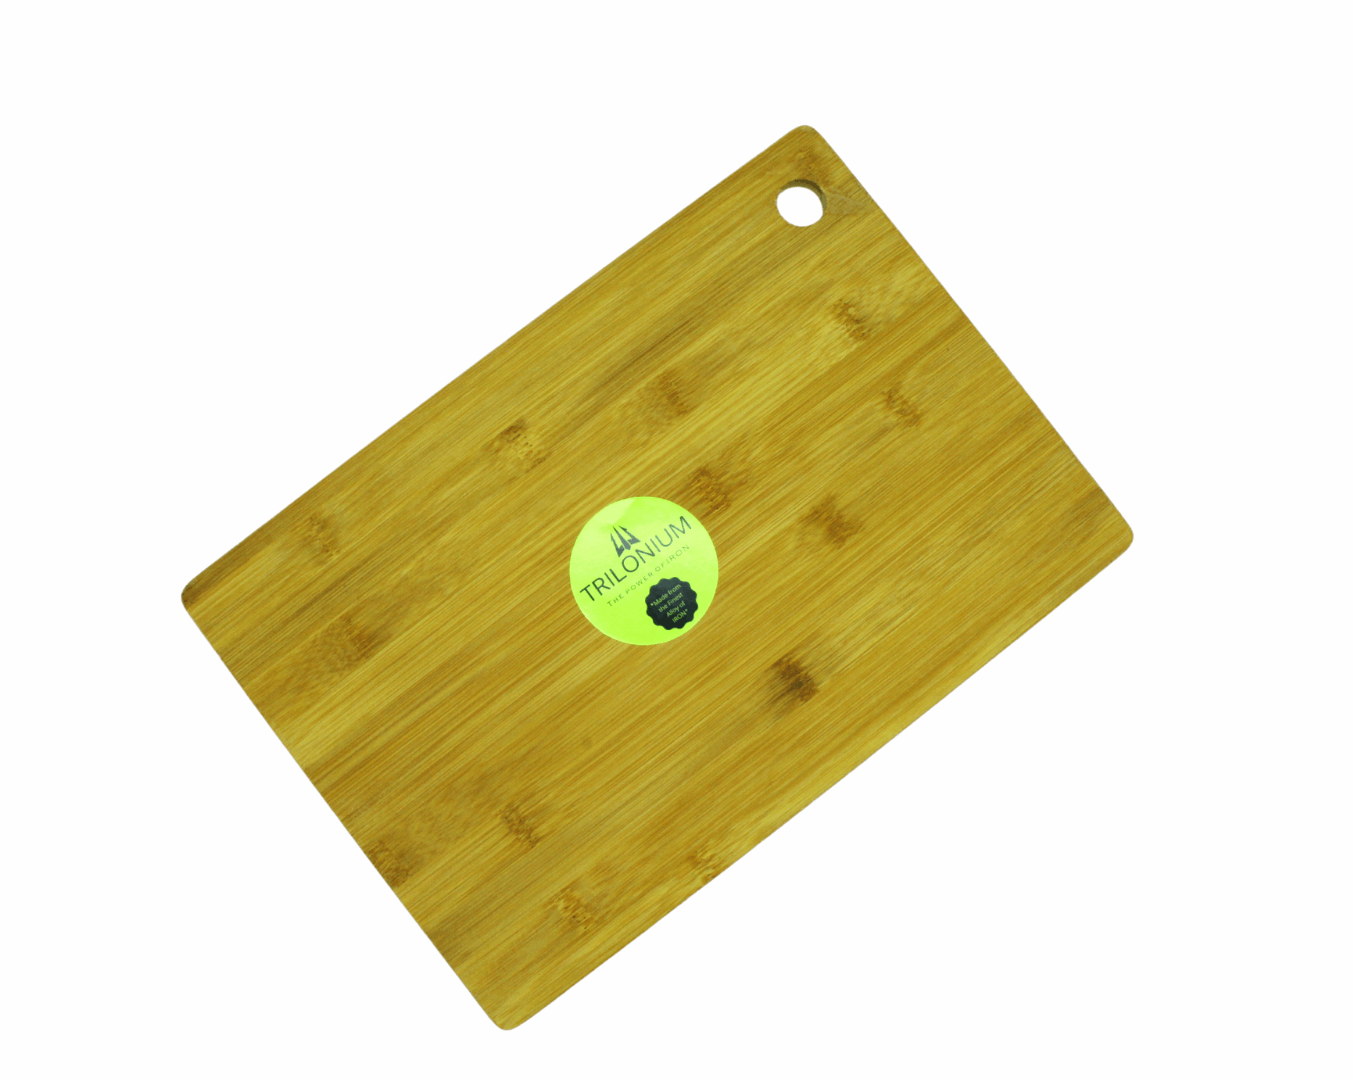 Bamboo Chopping Board | Cutting Board 13 x 9 inches | 0.52 KG TRILONIUM | Cast Iron Cookware